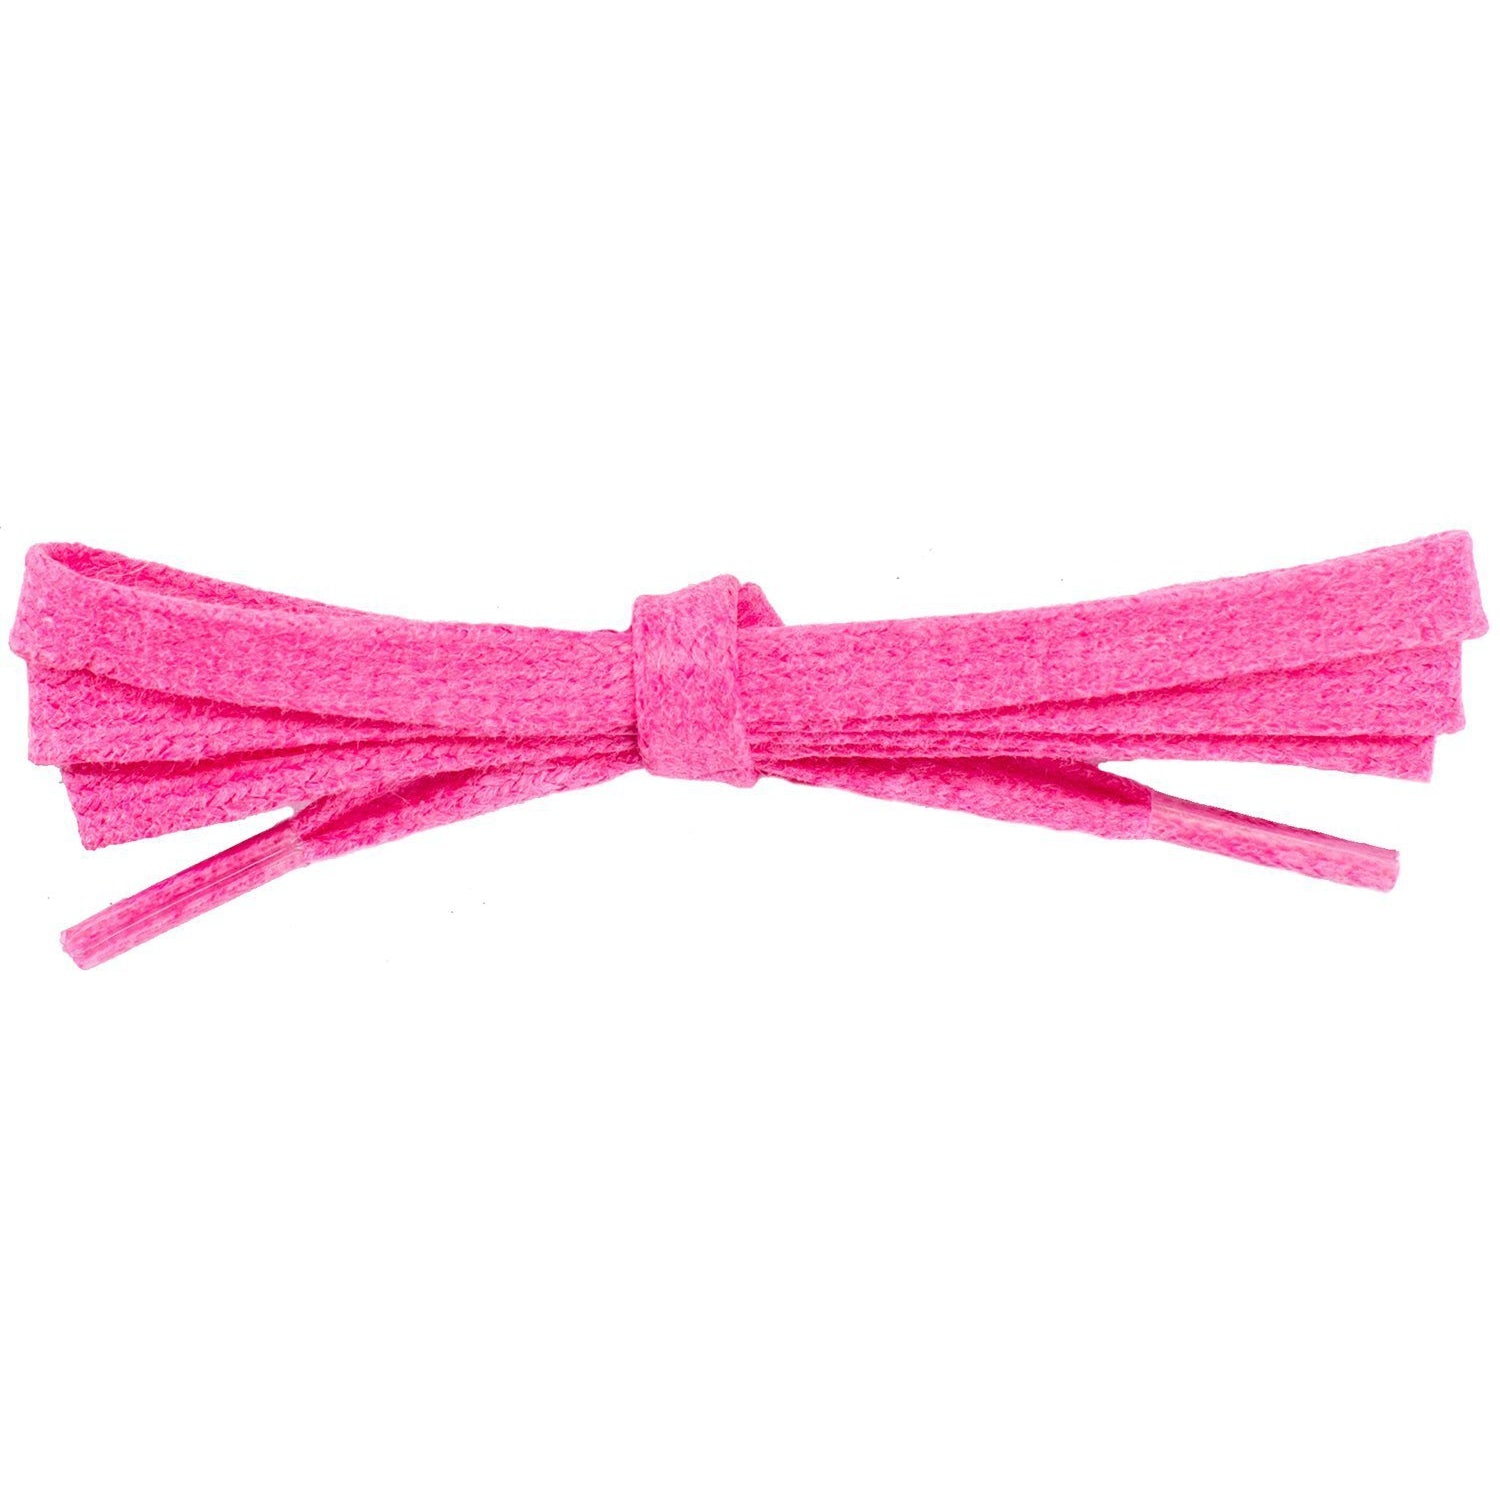 Wholesale Waxed Cotton Flat DRESS Laces 1/4'' - Hot Pink (12 Pair Pack) Shoelaces